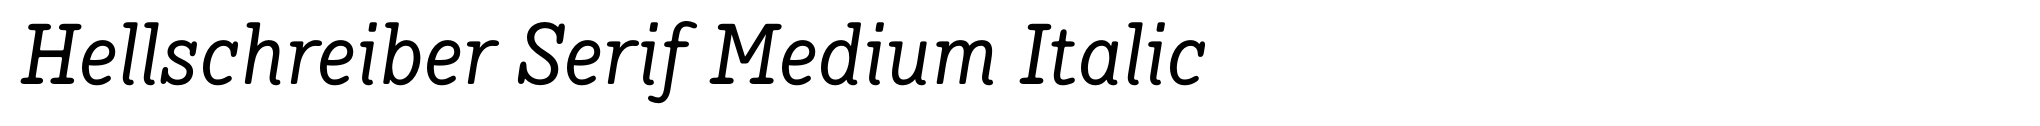 Hellschreiber Serif Medium Italic image